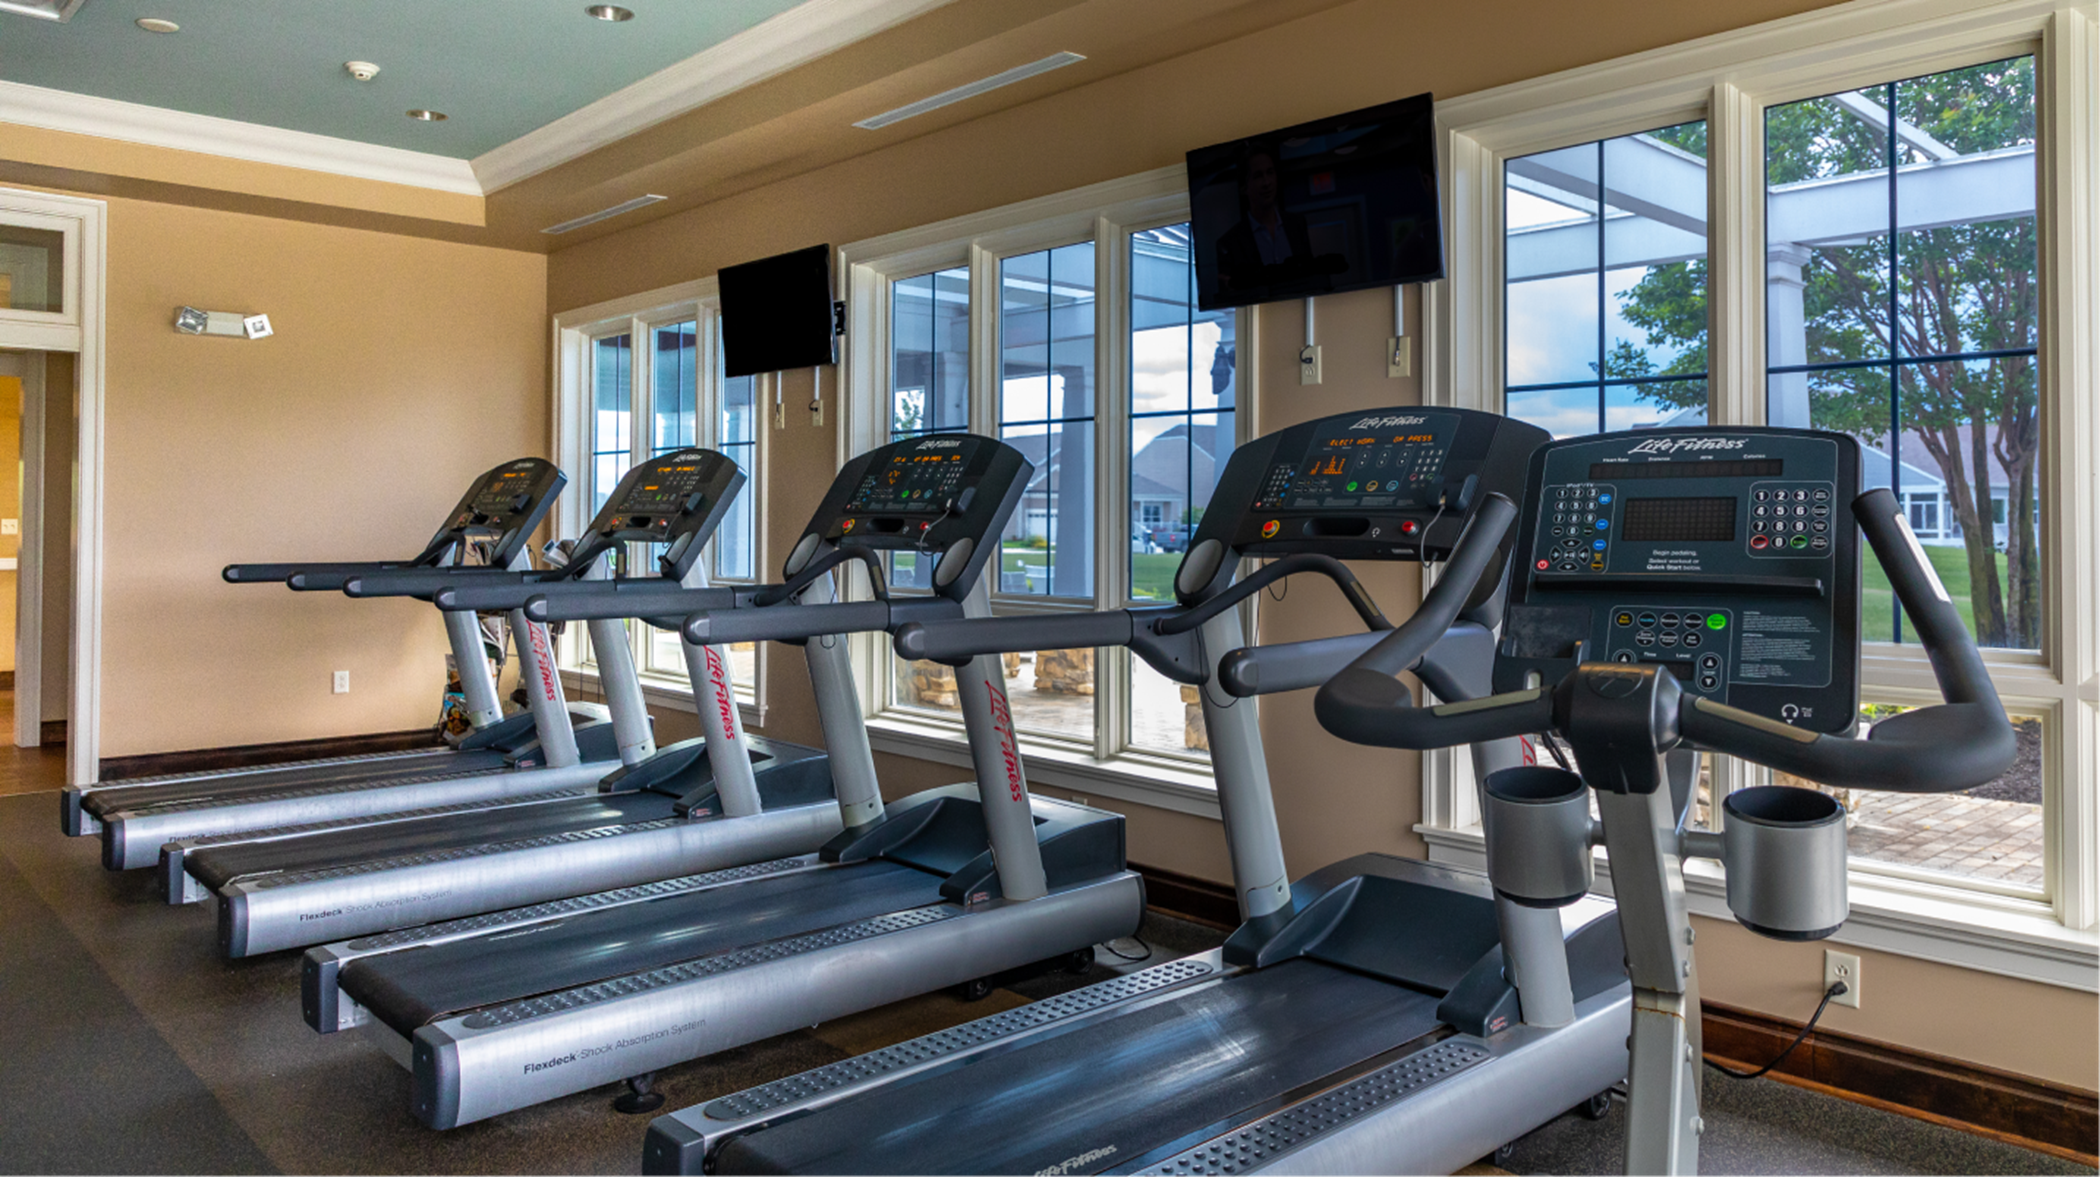 Fitness center showing treadmills